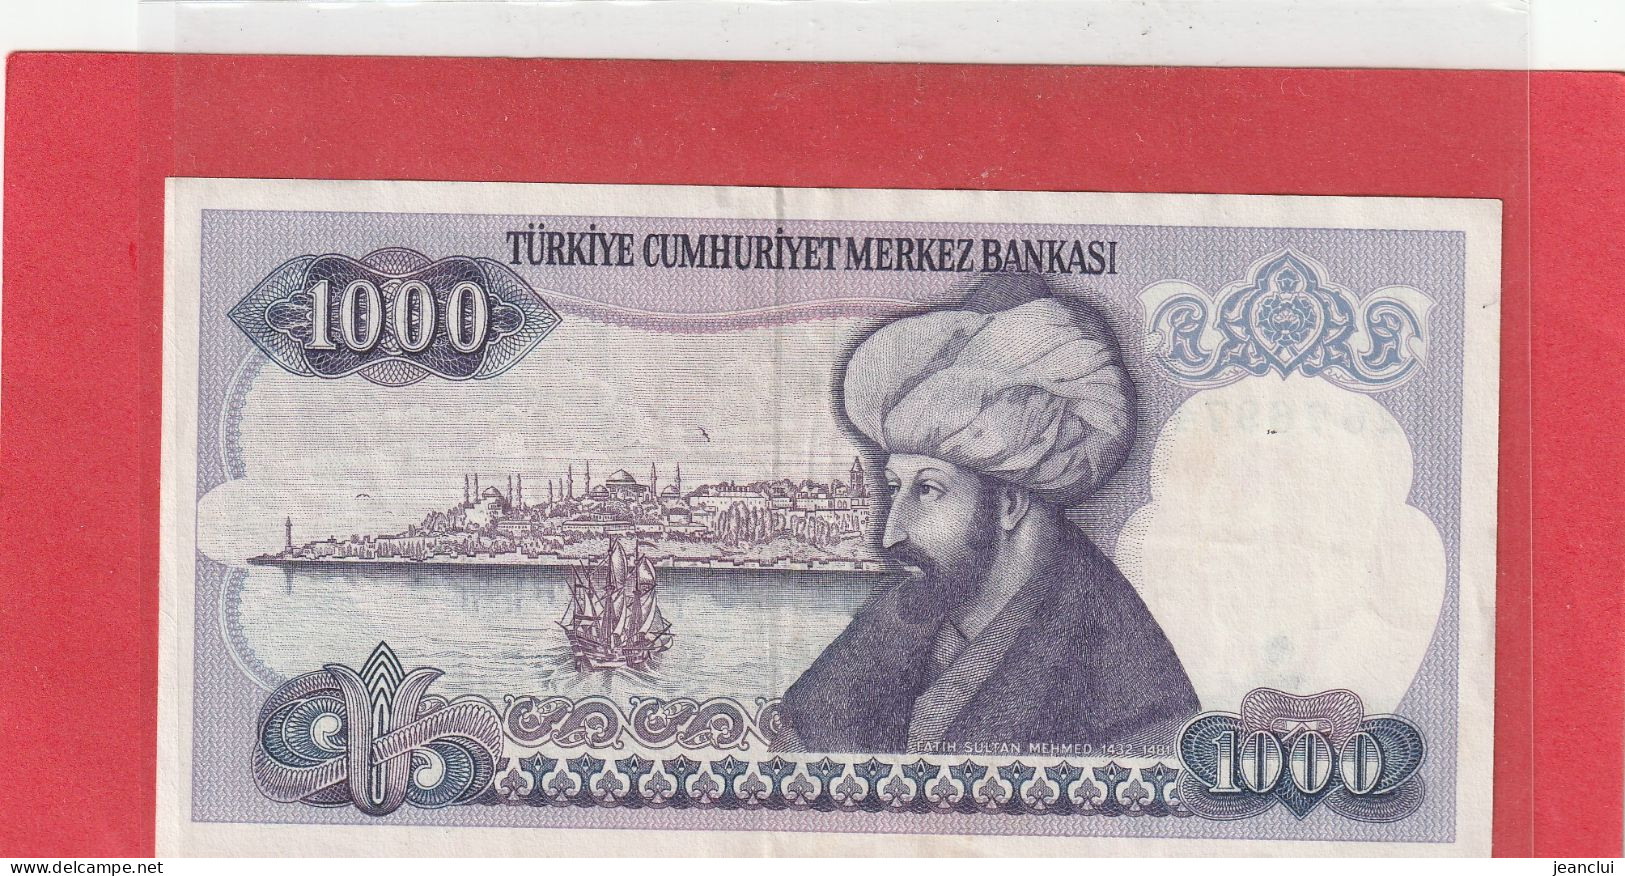 TURKIYE CUMHURIYET MERKEZ BANKASI . 1.000 LIRA . 14 OCAK 1970  . N°  A26 769745 .  2 SCANNES  .  BILLET USITE - Türkei